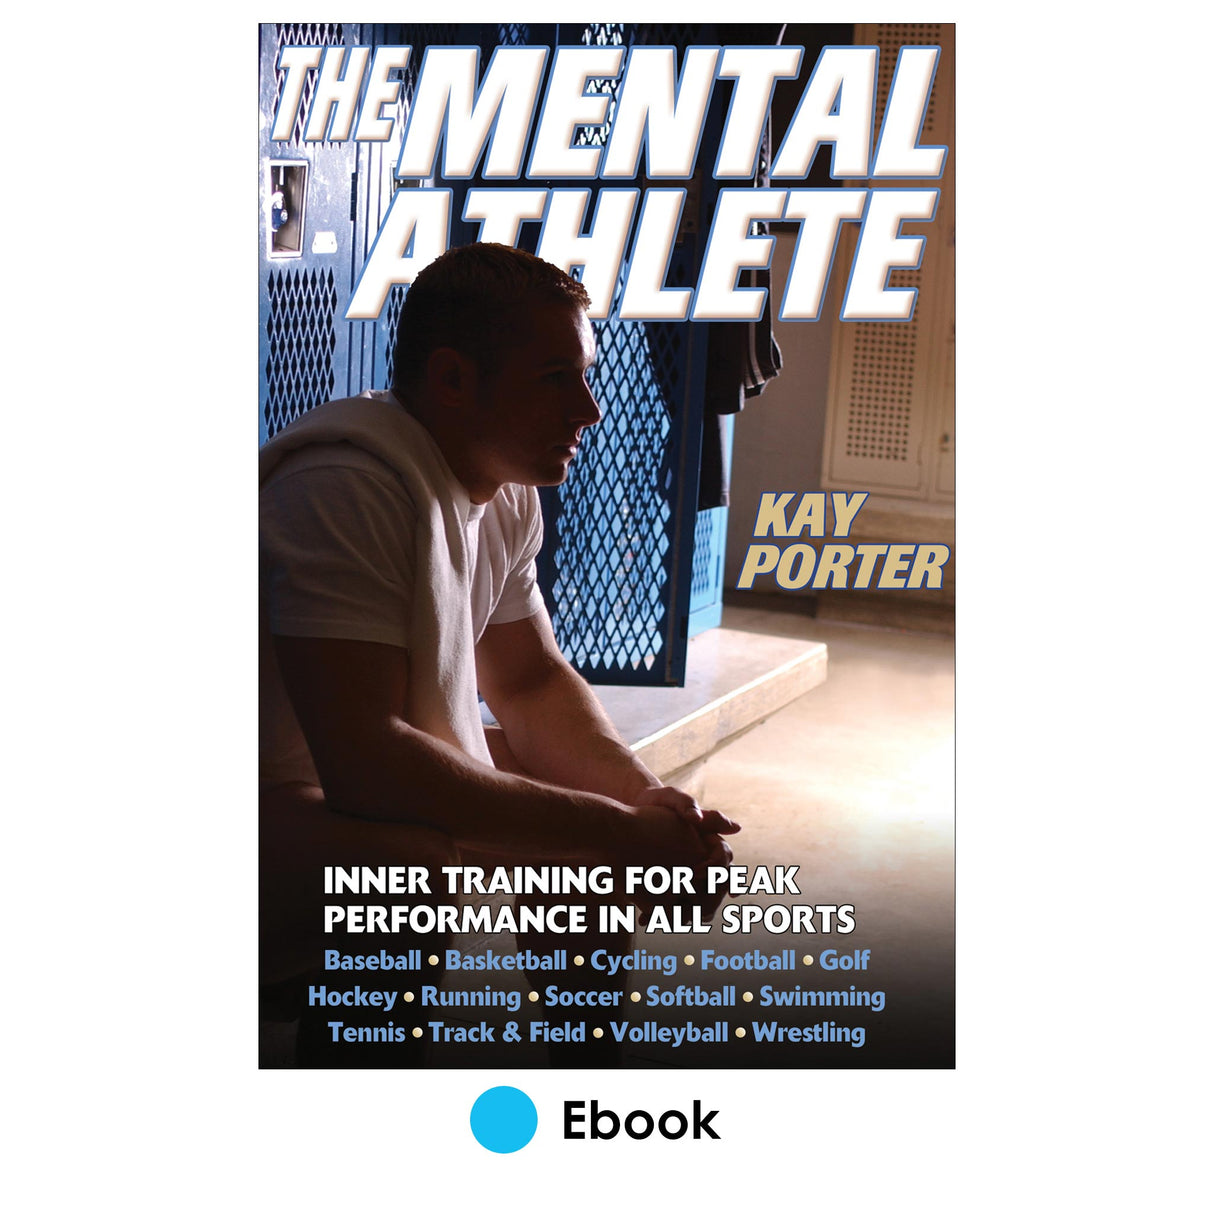 Mental Athlete PDF, The